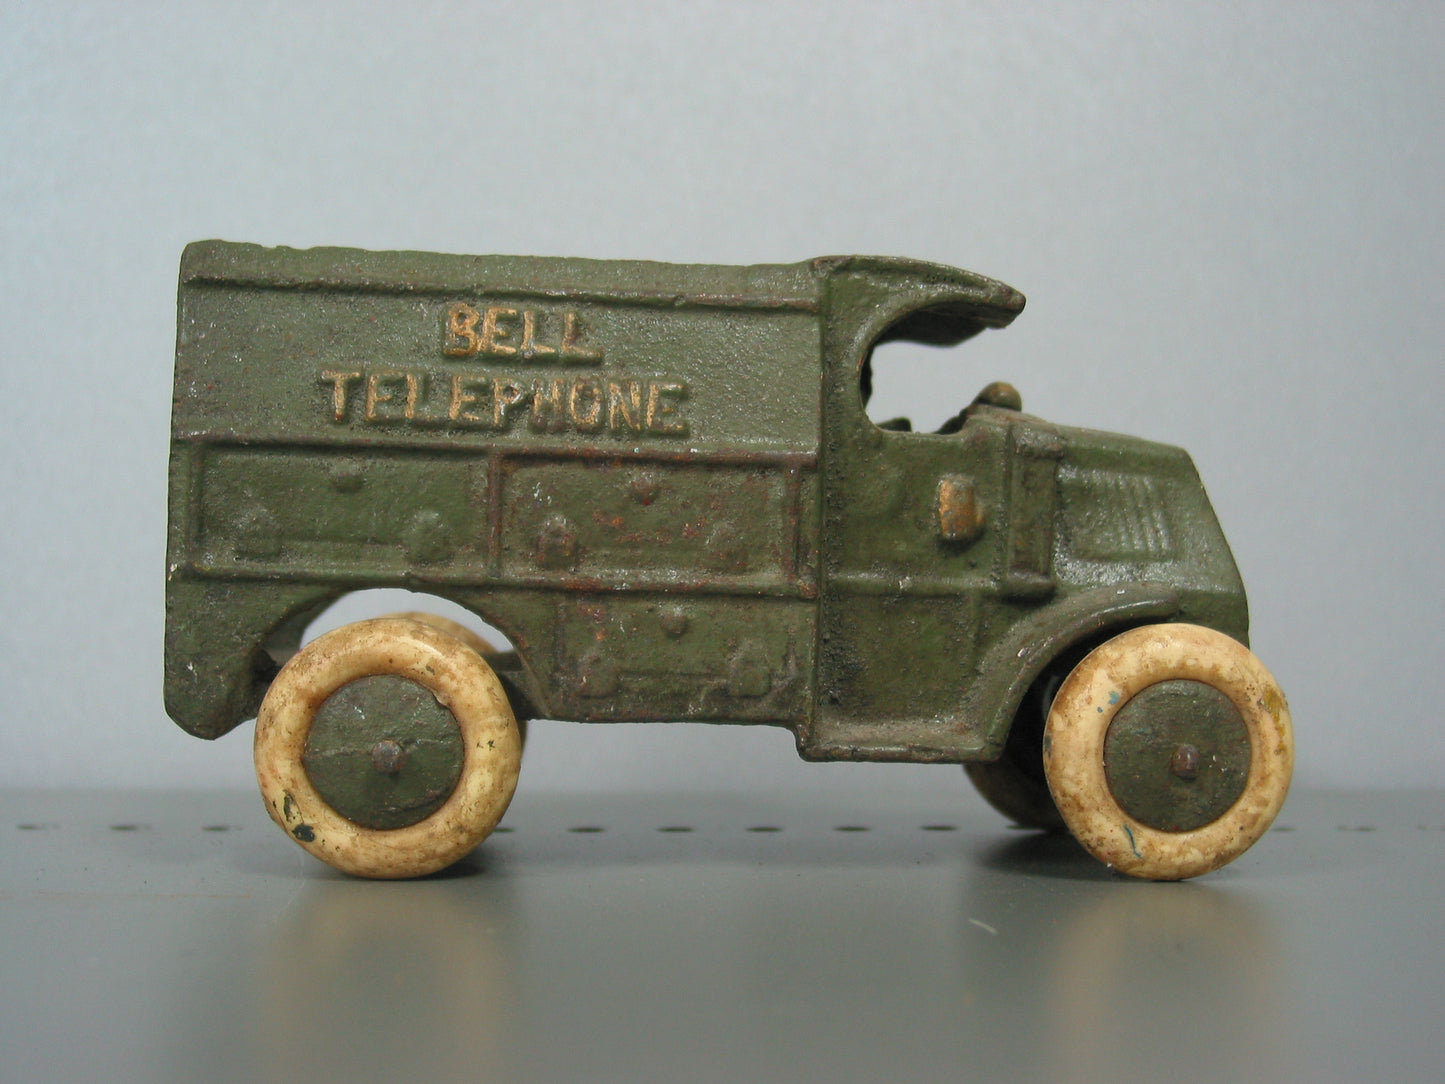 Bell Telephone Truck